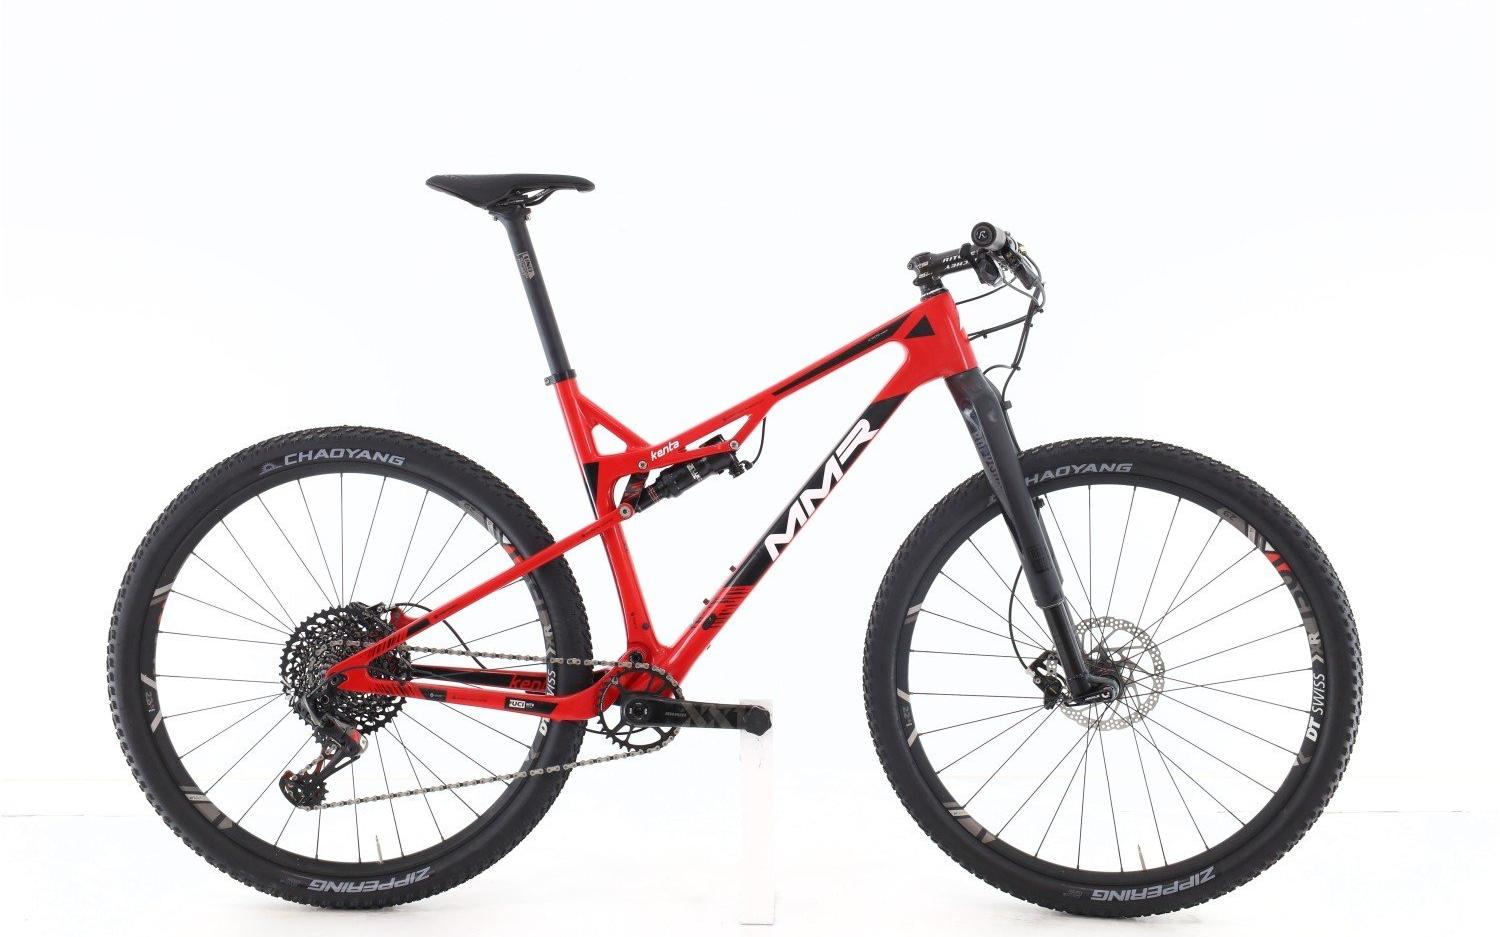 Mountain Bike MMR Zyclora ·  Kenta RG carbonio X01, Usata, 2020, Barcelona